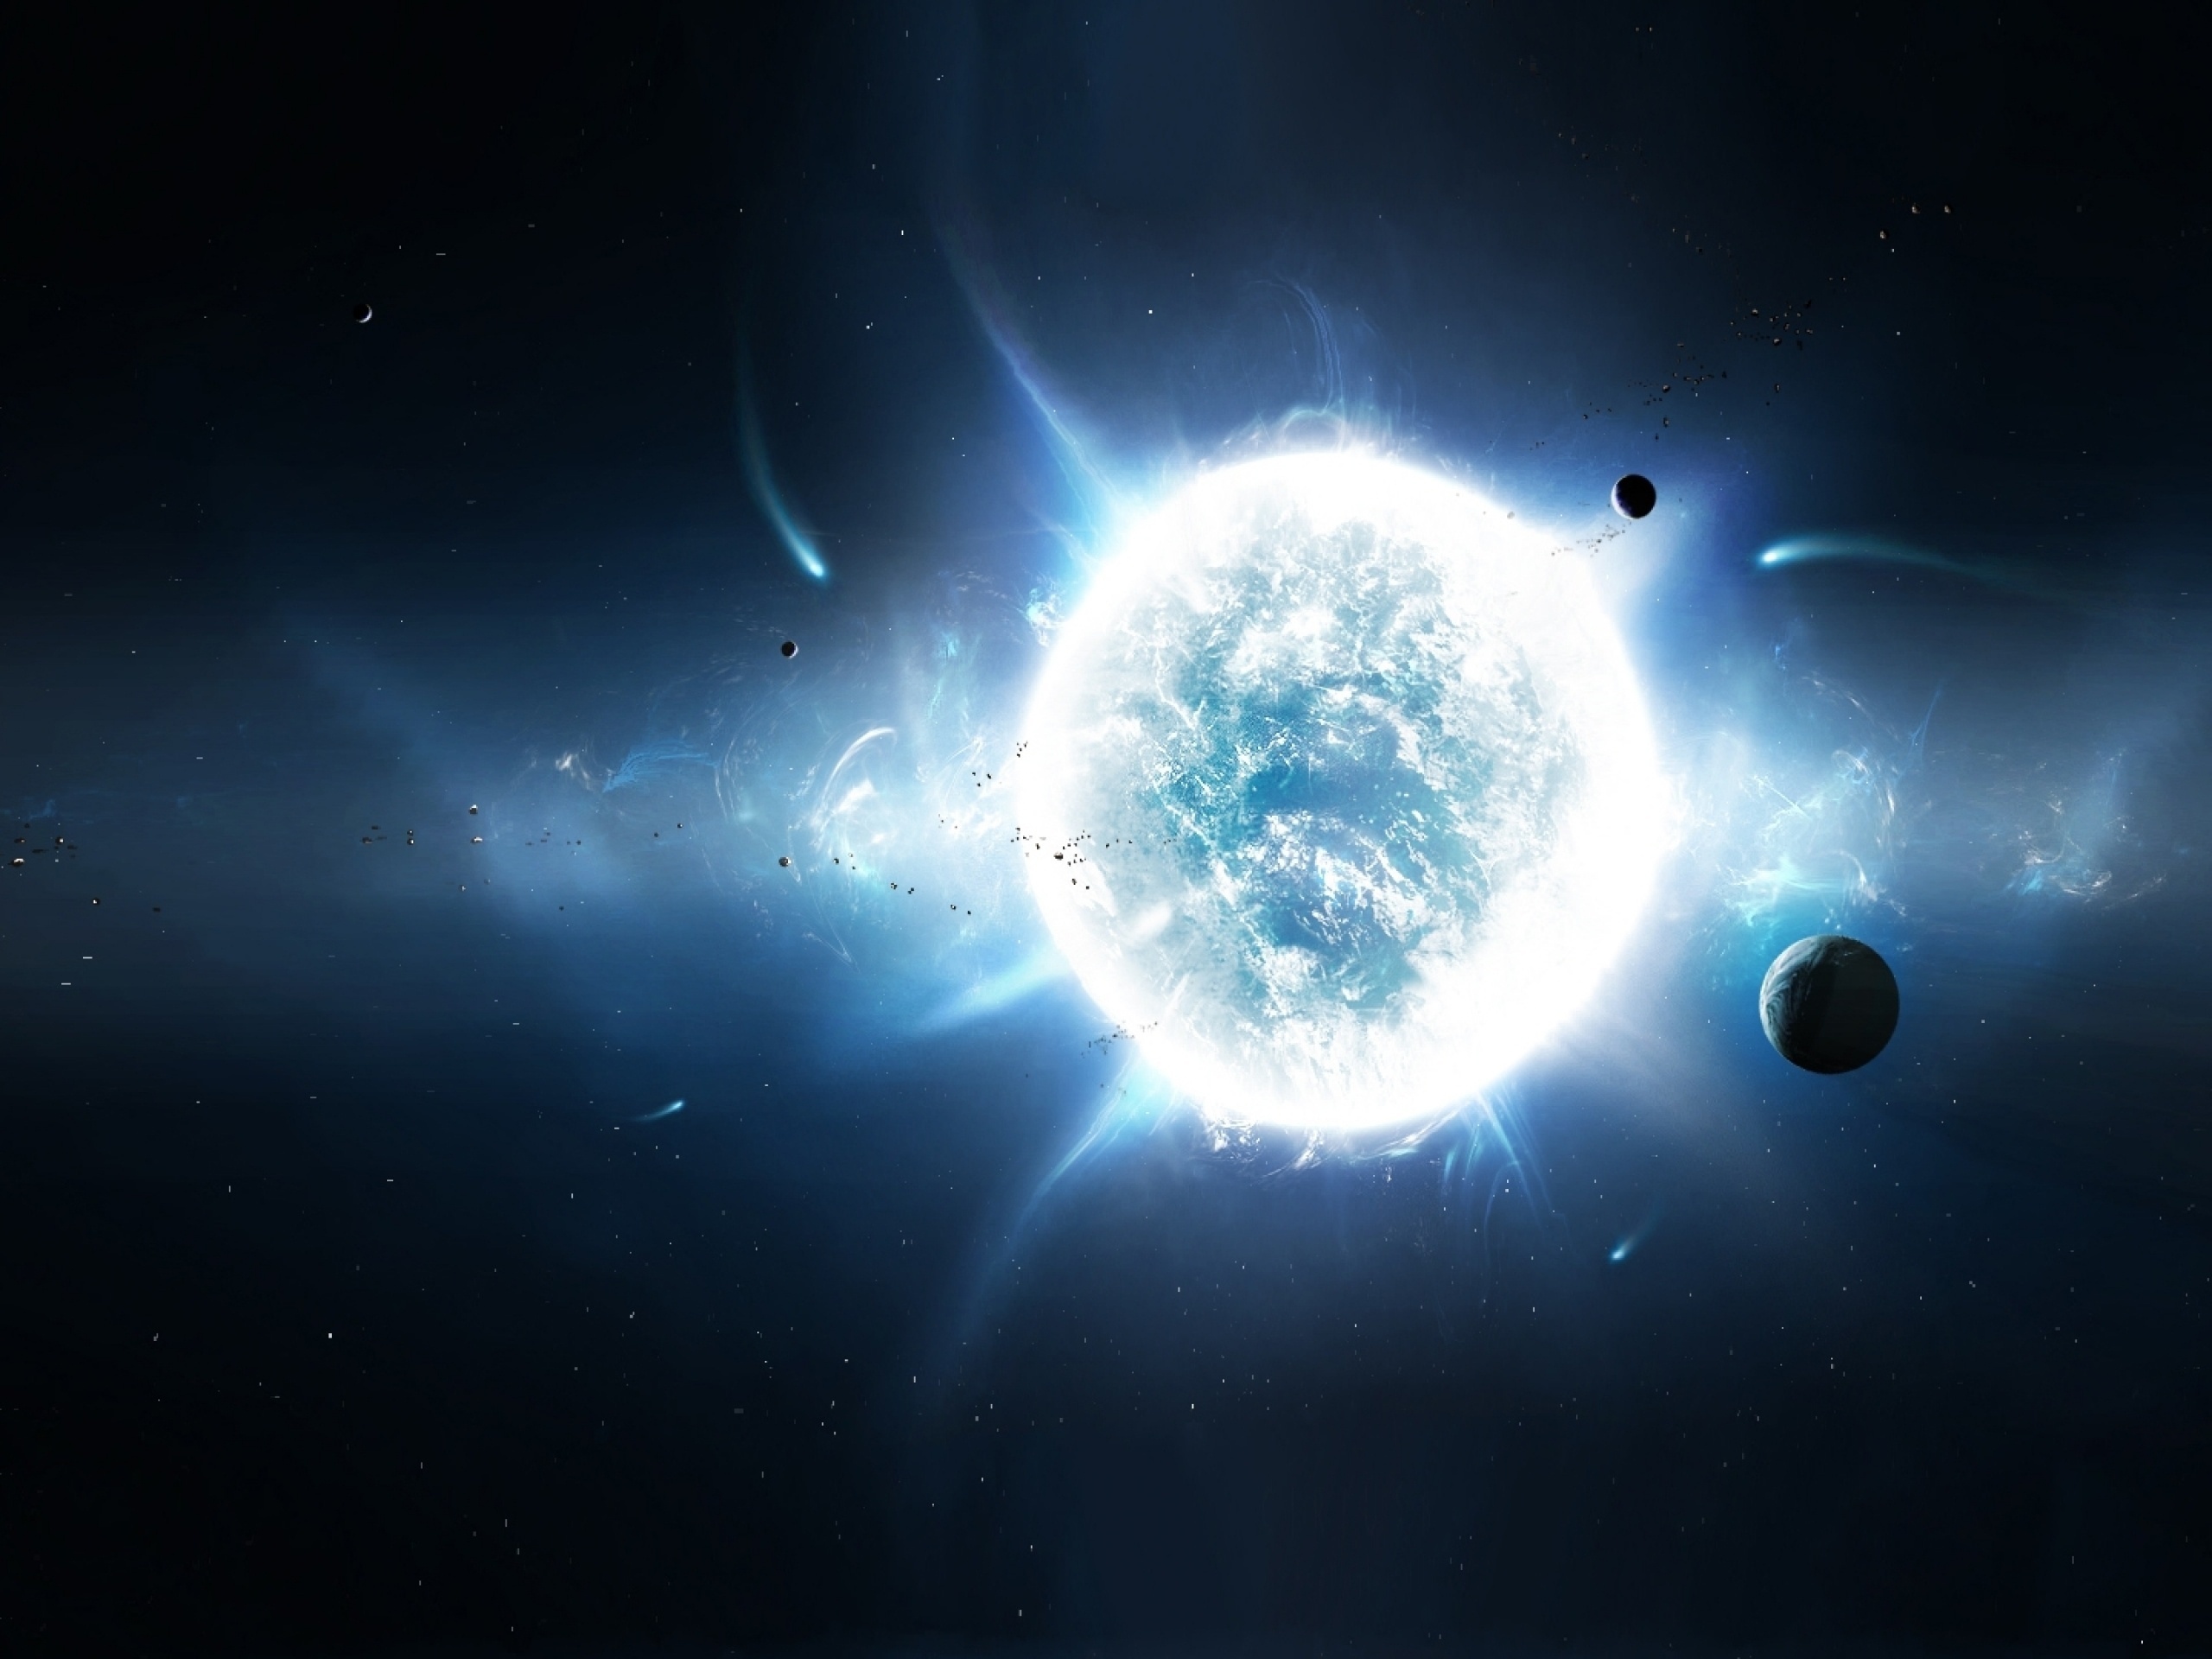 Голубой гипергигант звезда r136a1